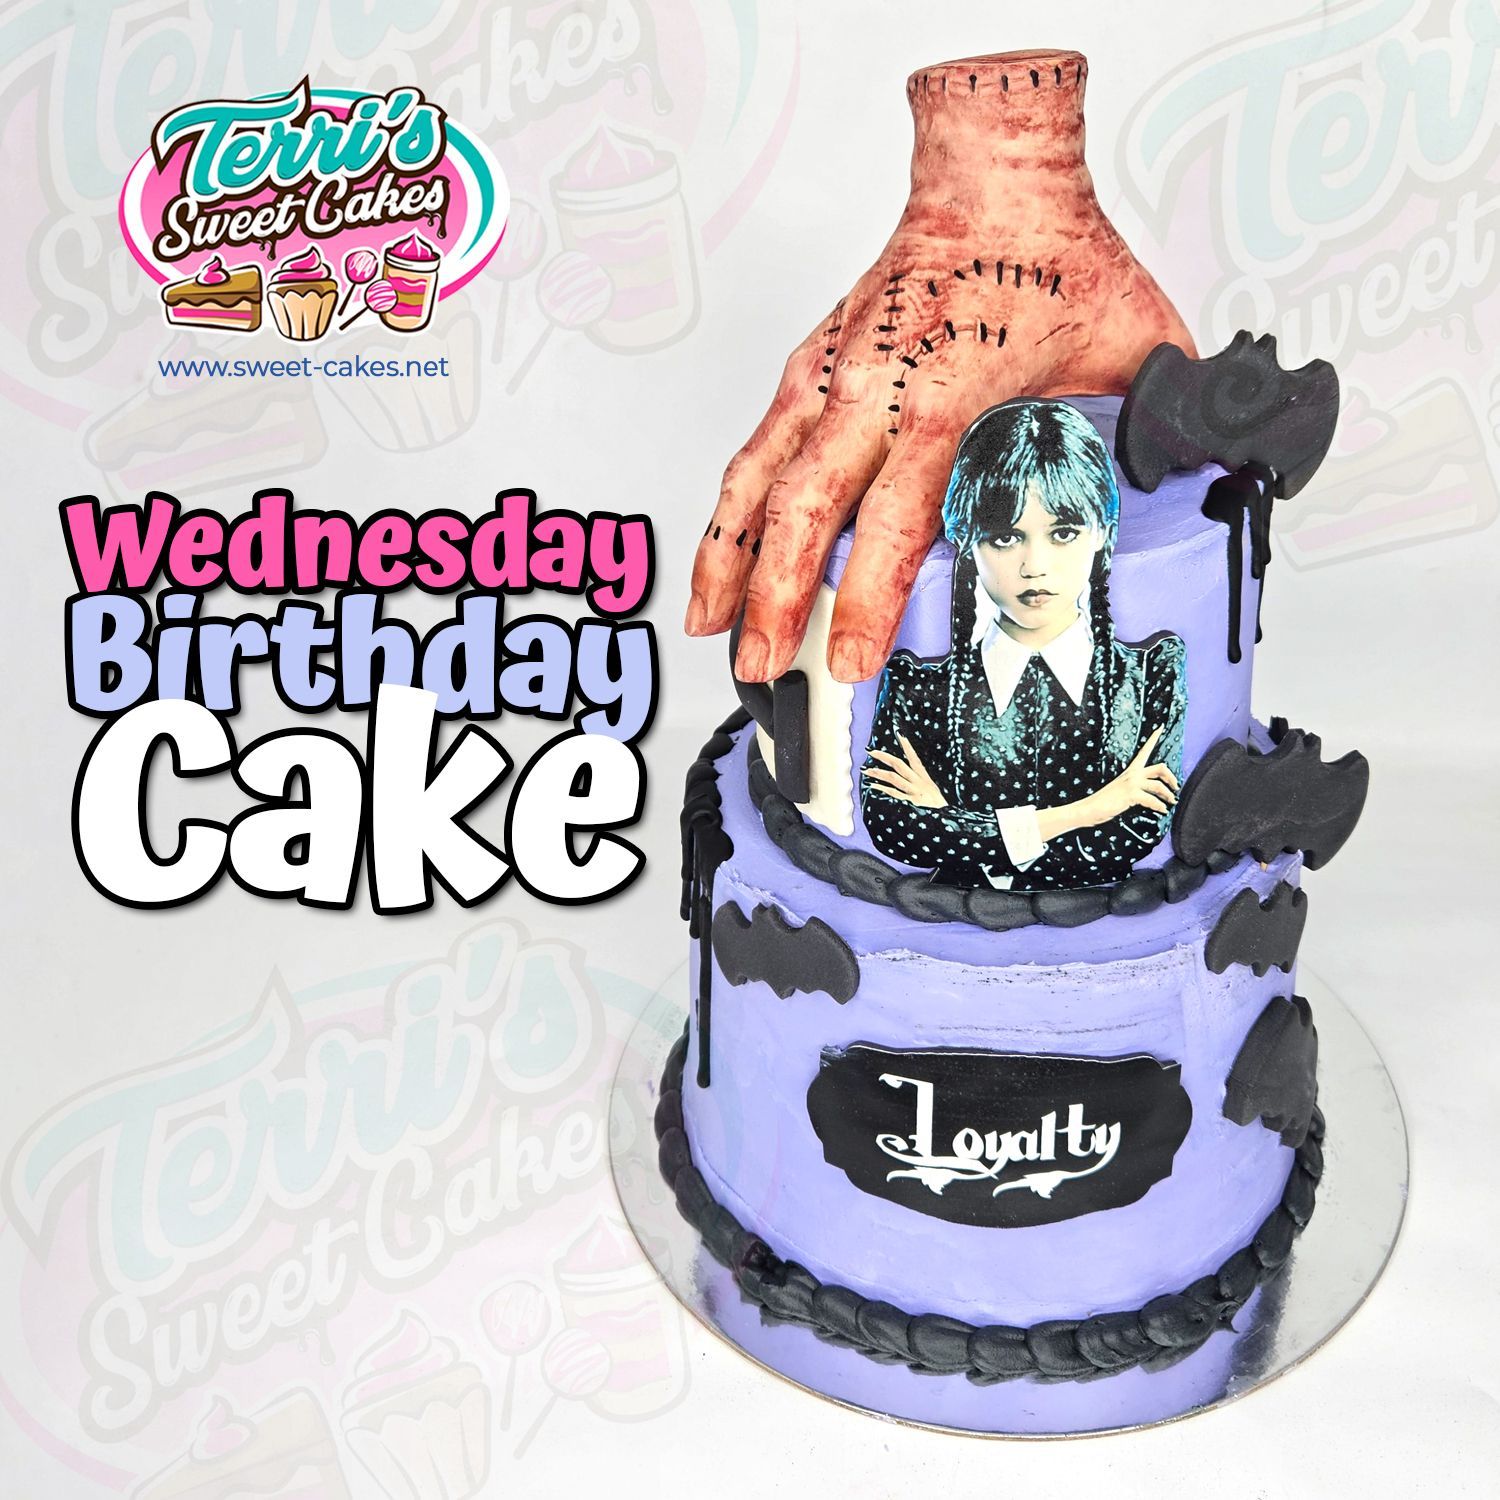 Wednesday Themed Birthday Cake by Terri's Sweet Cakes